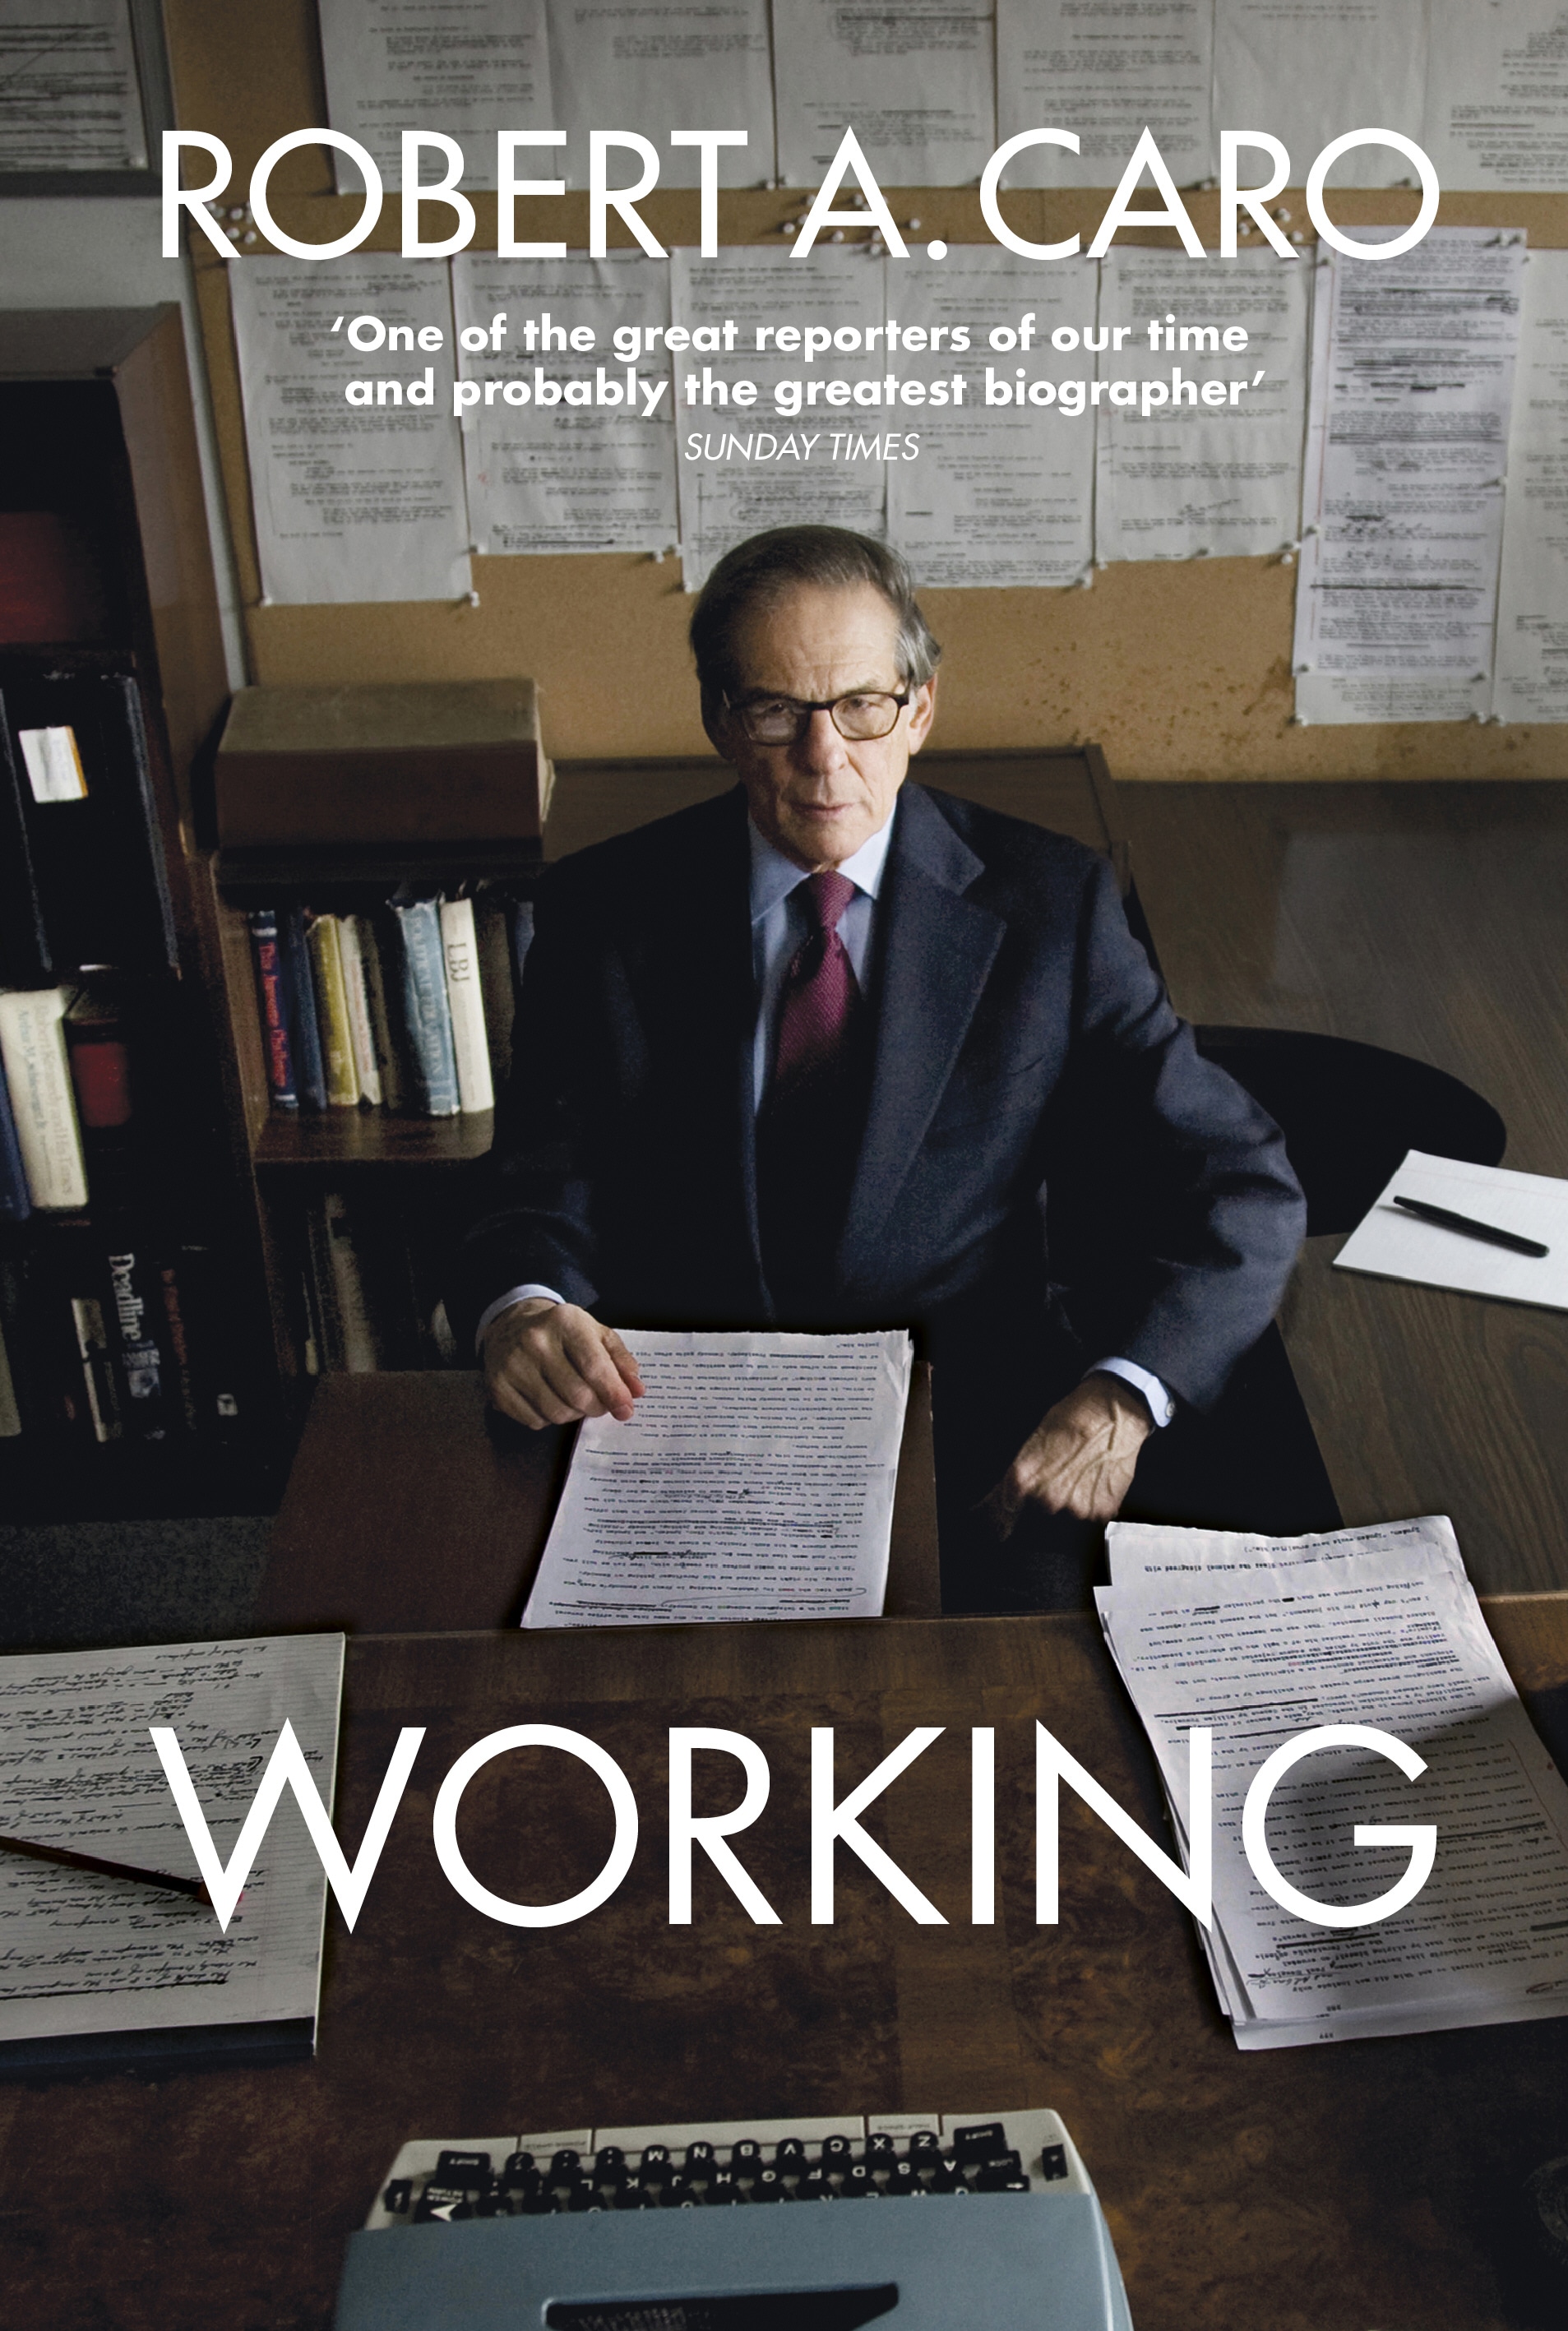 Book “Working” by Robert A Caro — April 25, 2019